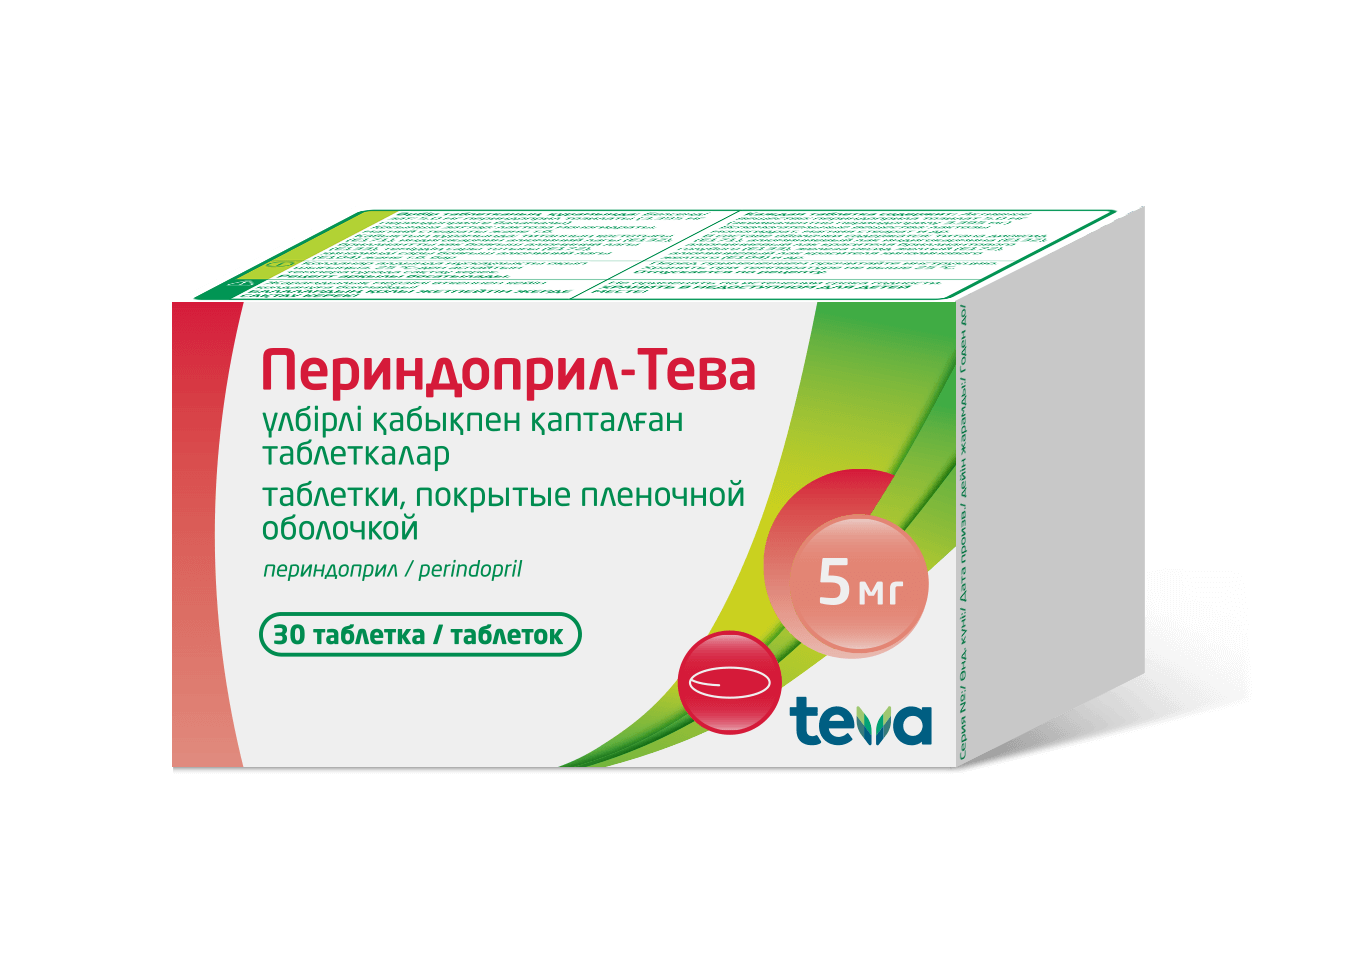 Препараты Тева — каталог лекарств компании Teva в Казахстане